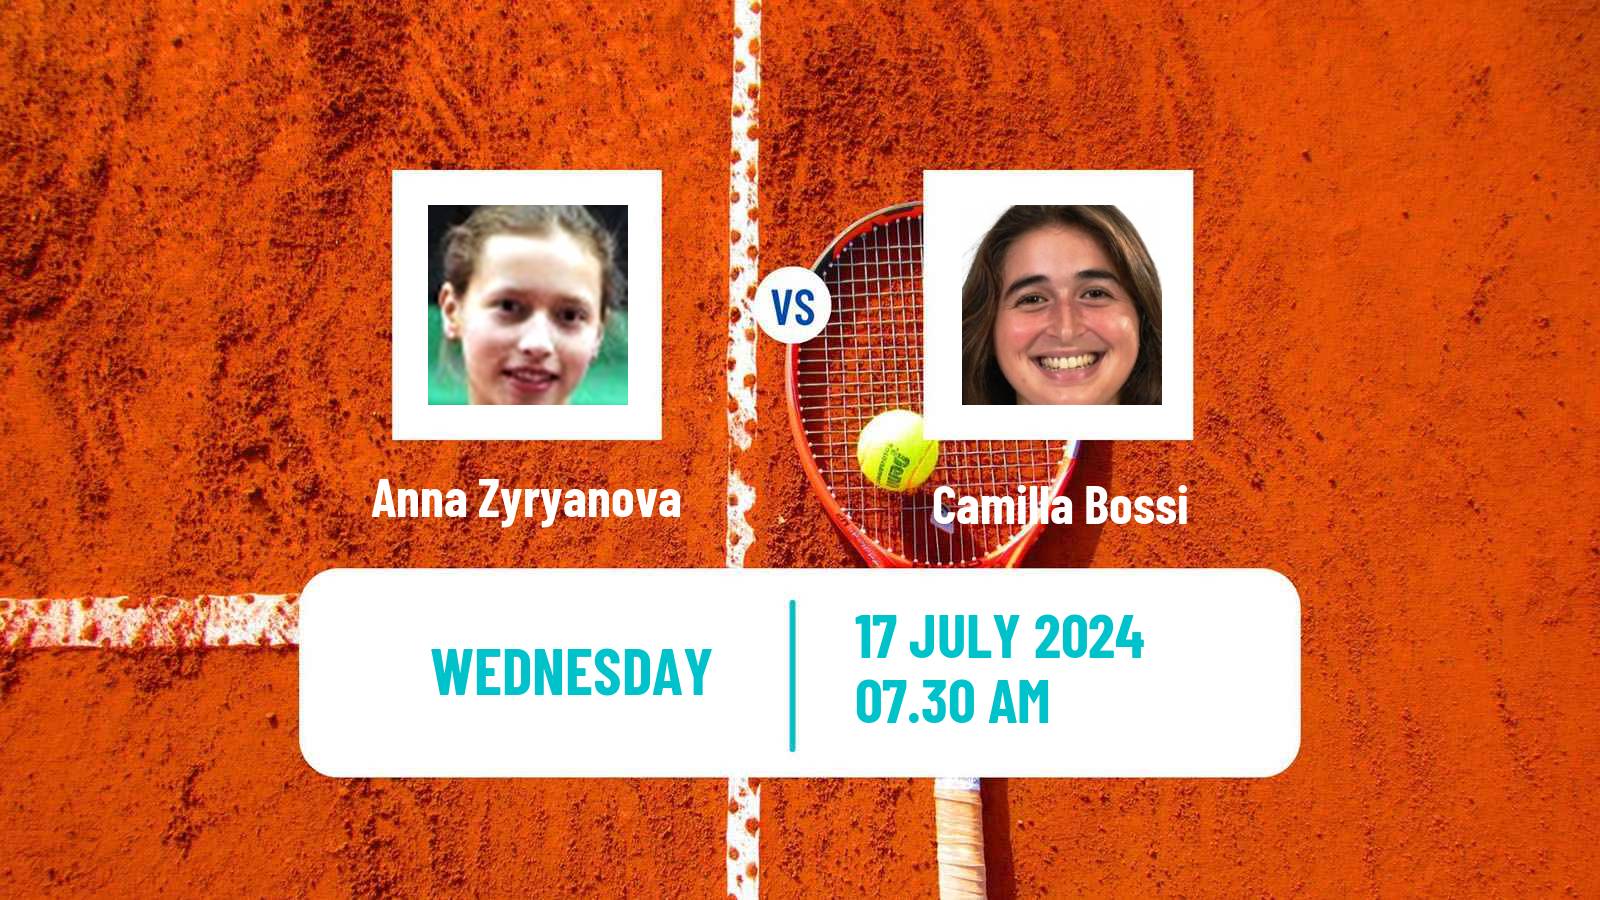 Tennis ITF W15 Krsko Women Anna Zyryanova - Camilla Bossi